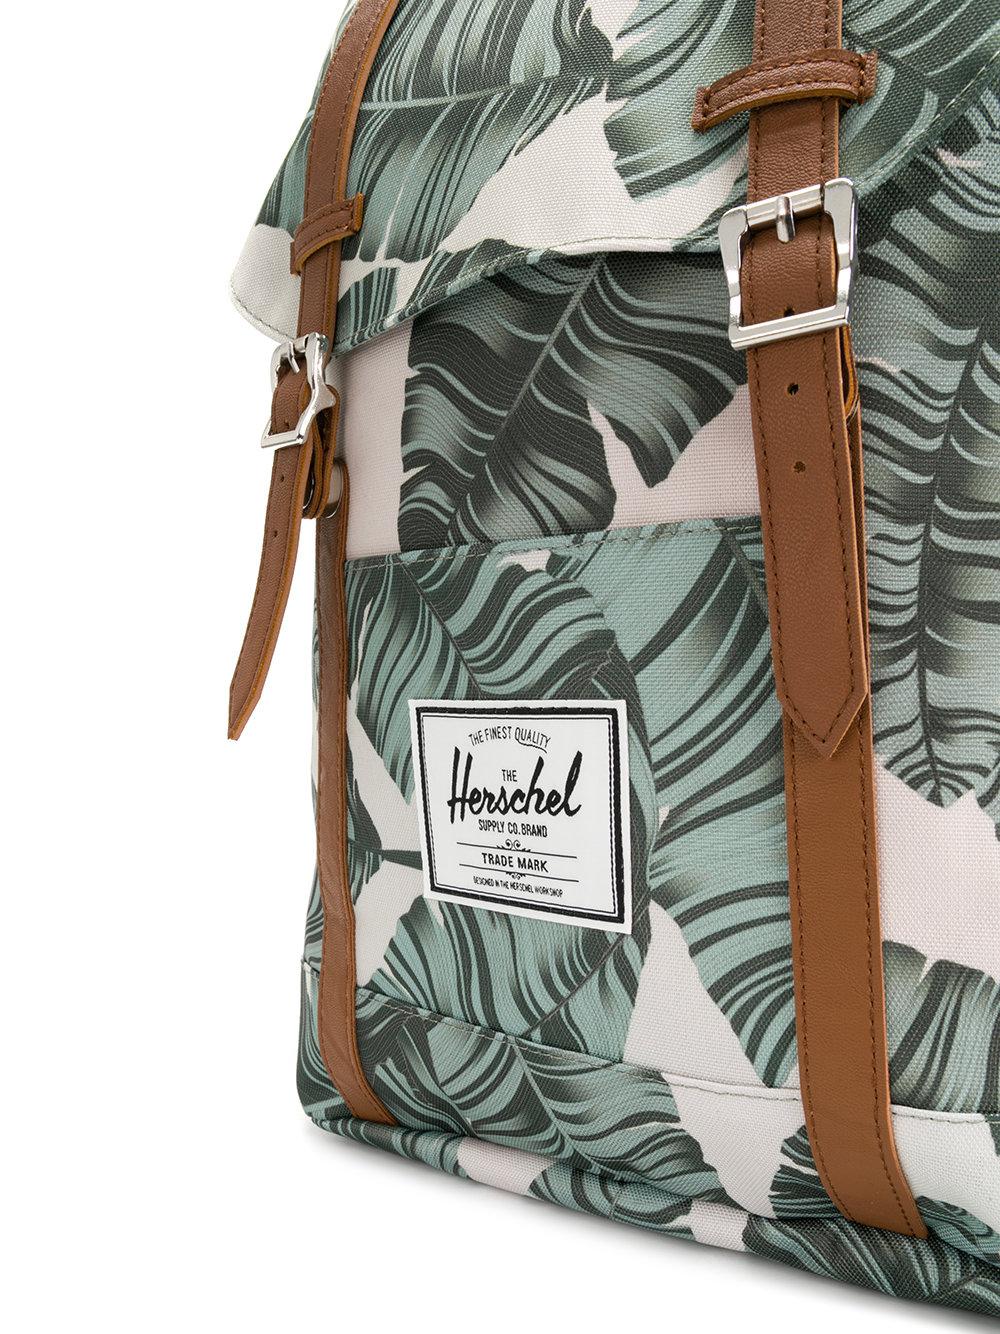 Herschel Supply Co. Tropical Print Backpack in Green for Men | Lyst